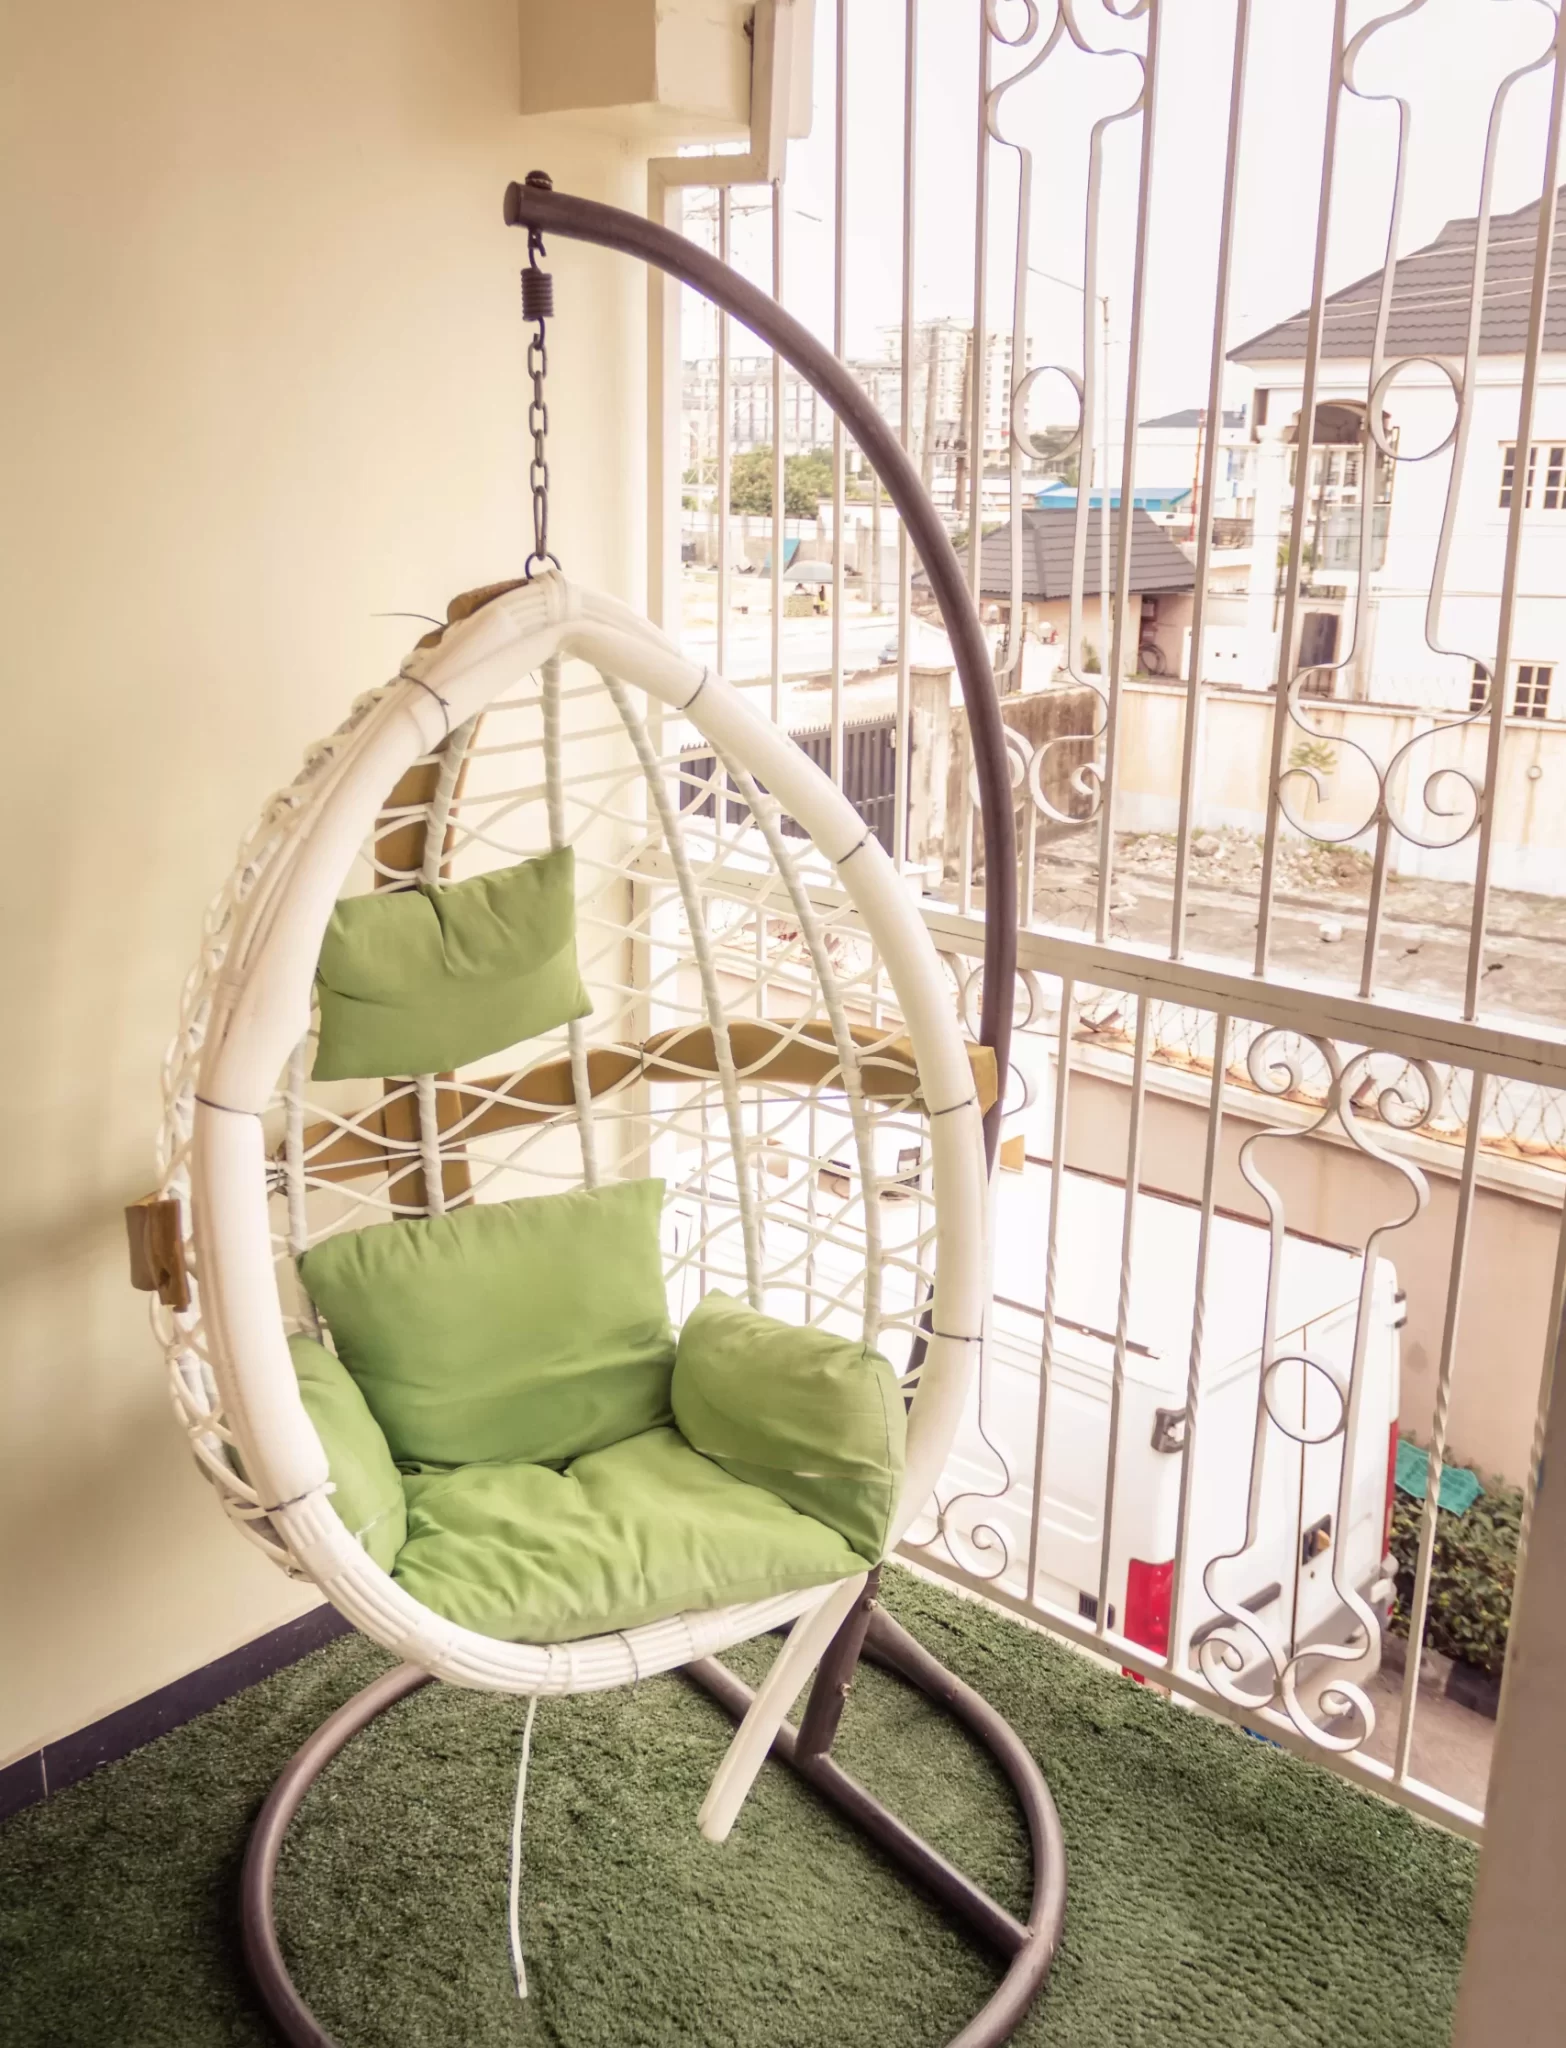 Install Hanging Chairs near Balcony: